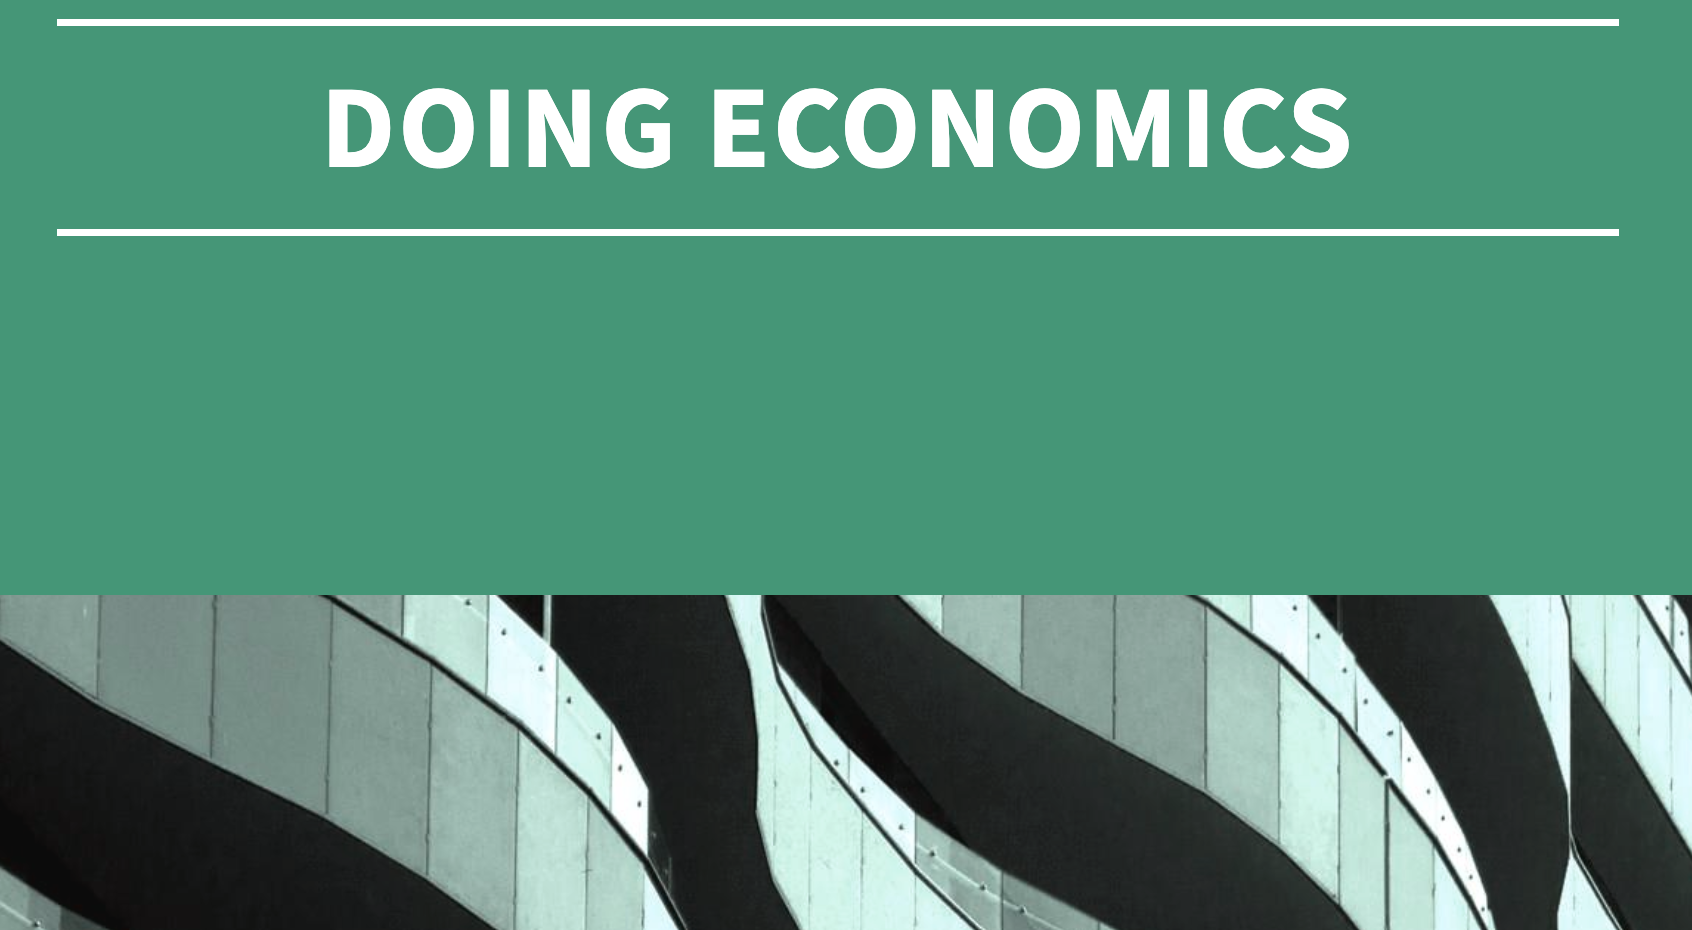 The Doing Economics landing page